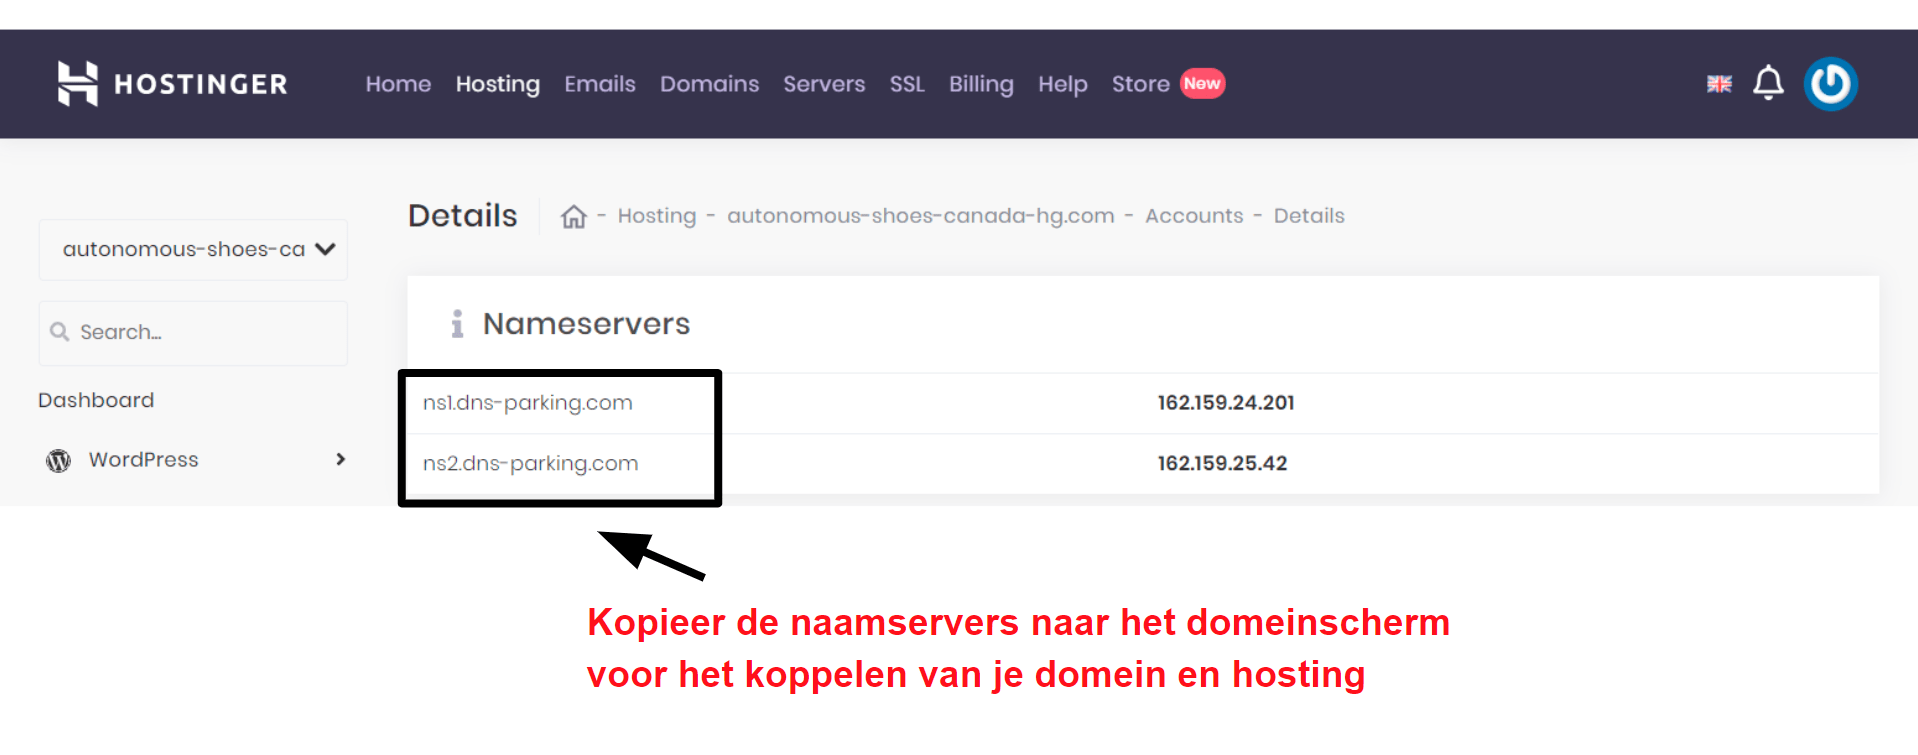 Hostinger domain connection information_NL